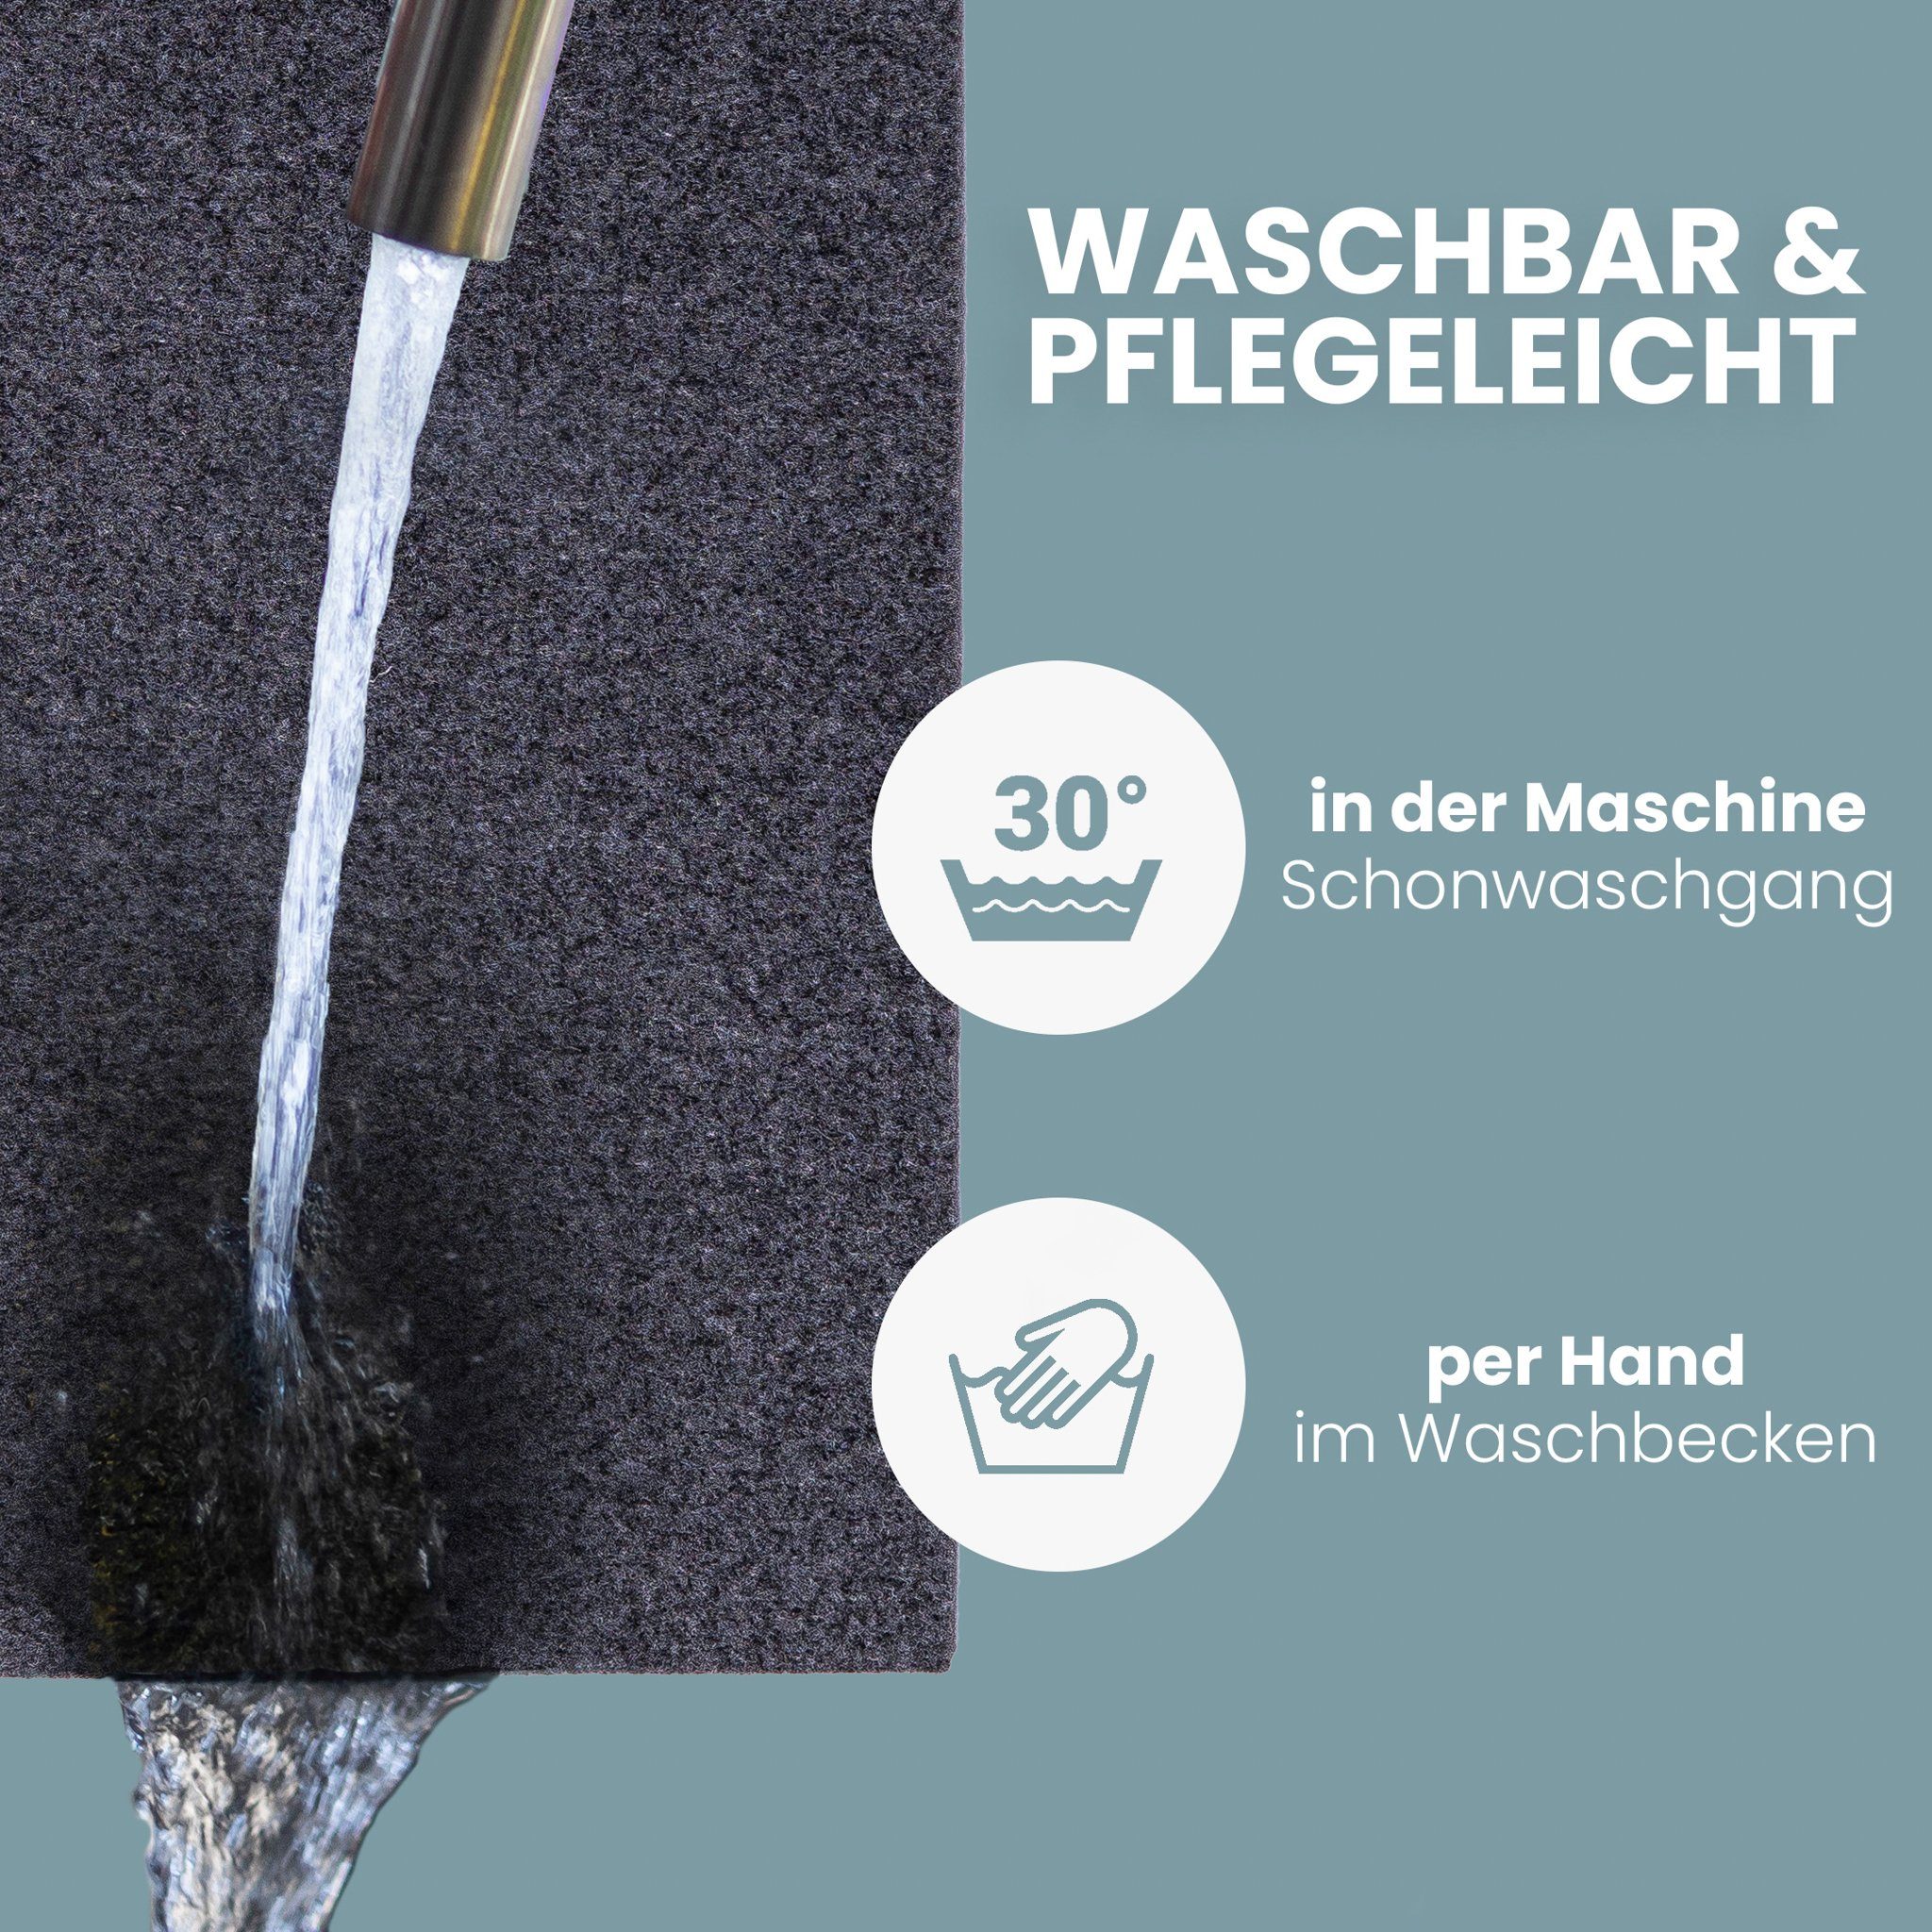 Platzset, Filz (40 x - Green Filz in and - 30cm) Easy Tischset Germany Made Platzsets, Recycling